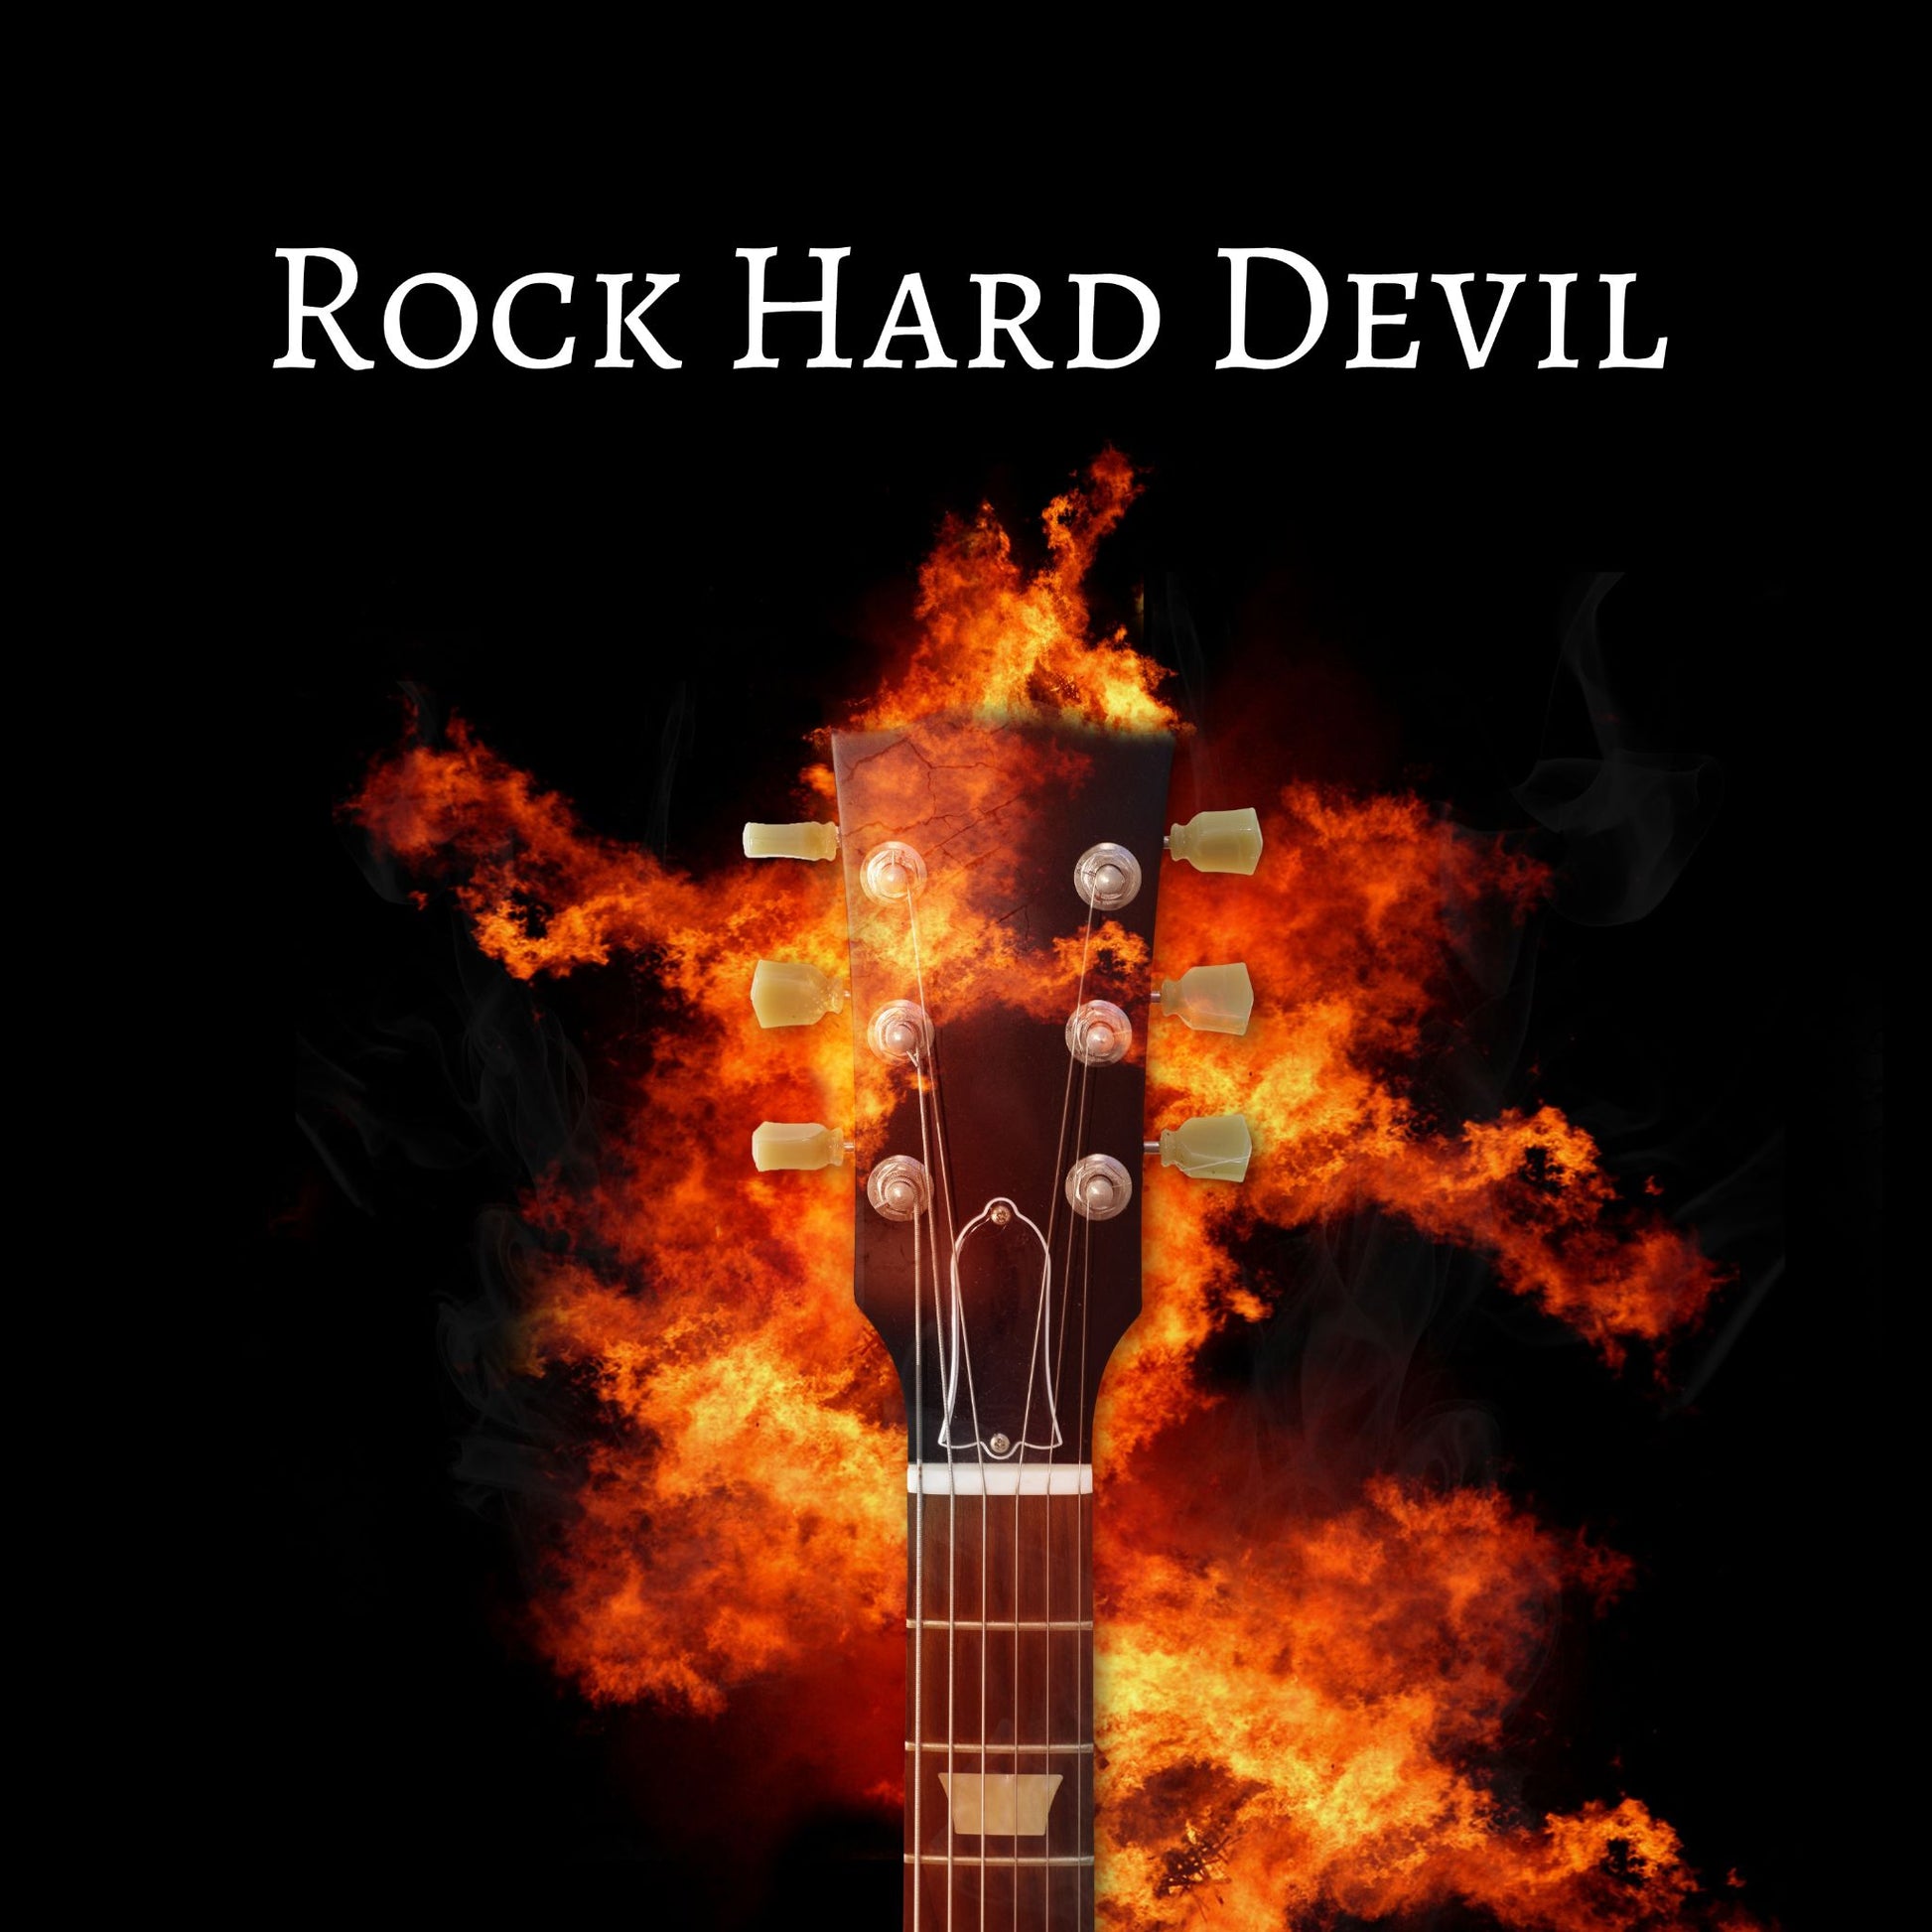 CD Cover of song Rock Hard Devil